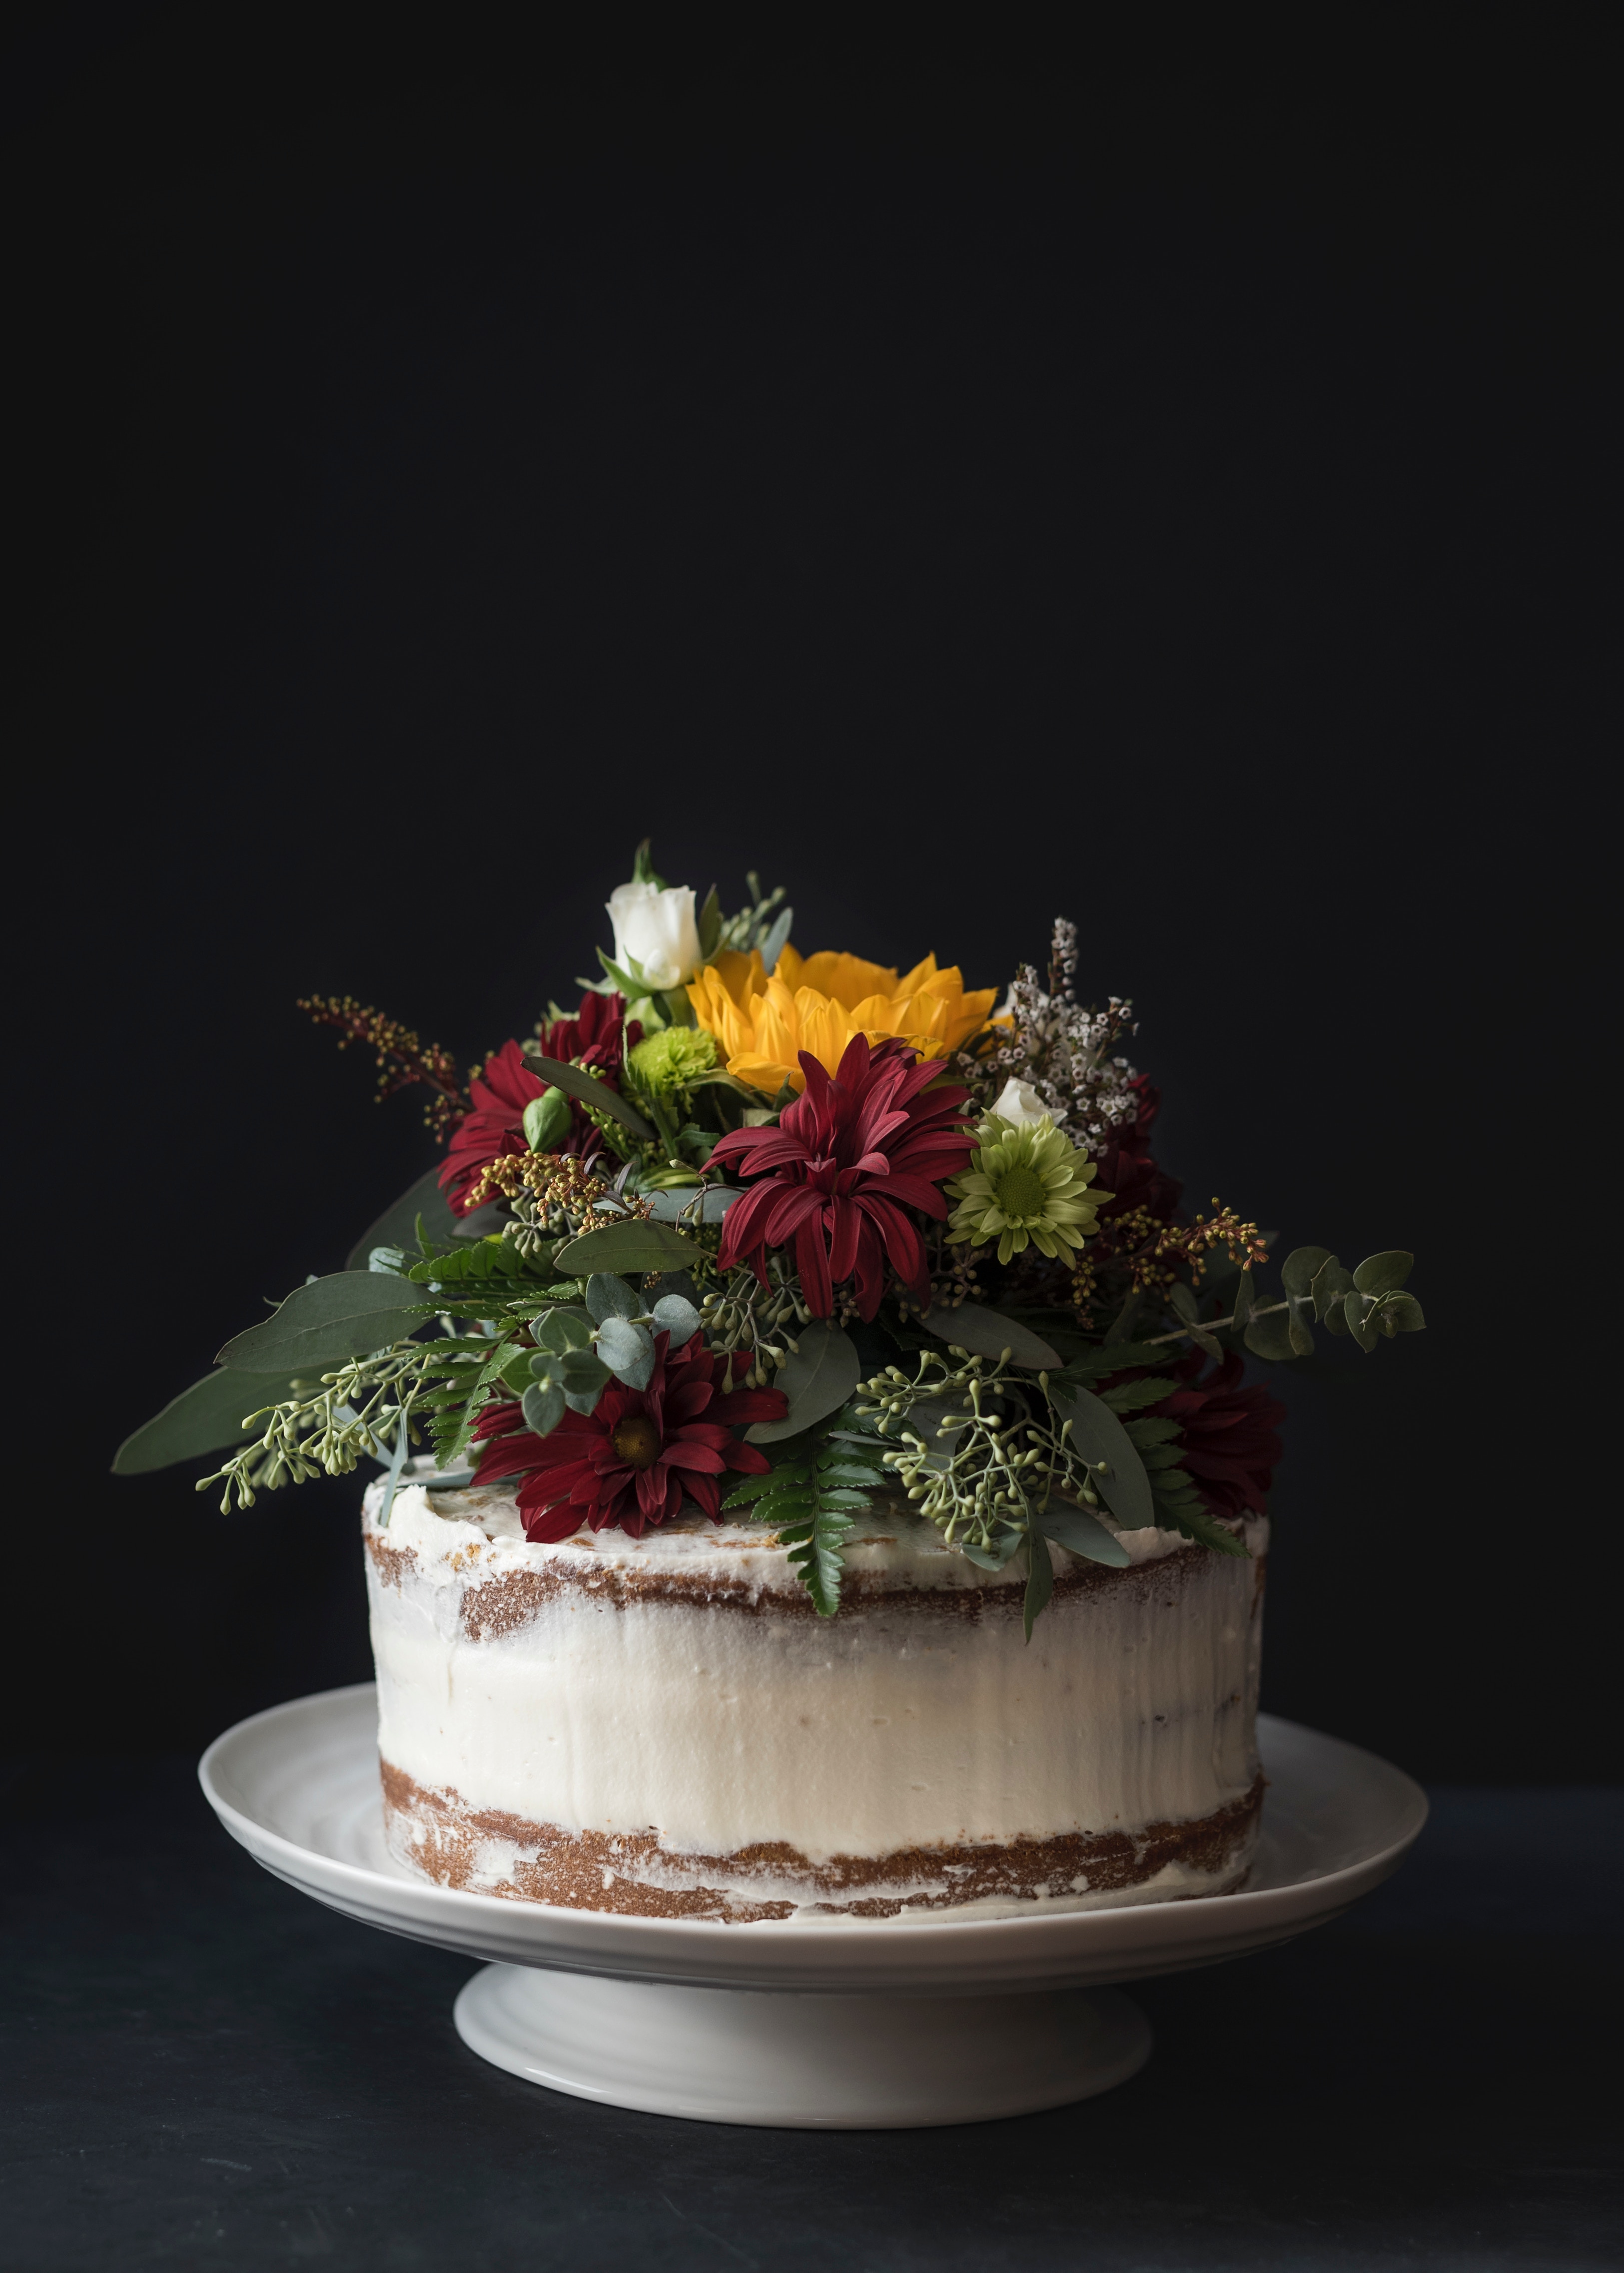 cake, flowers, food, desert, bakery products, baking